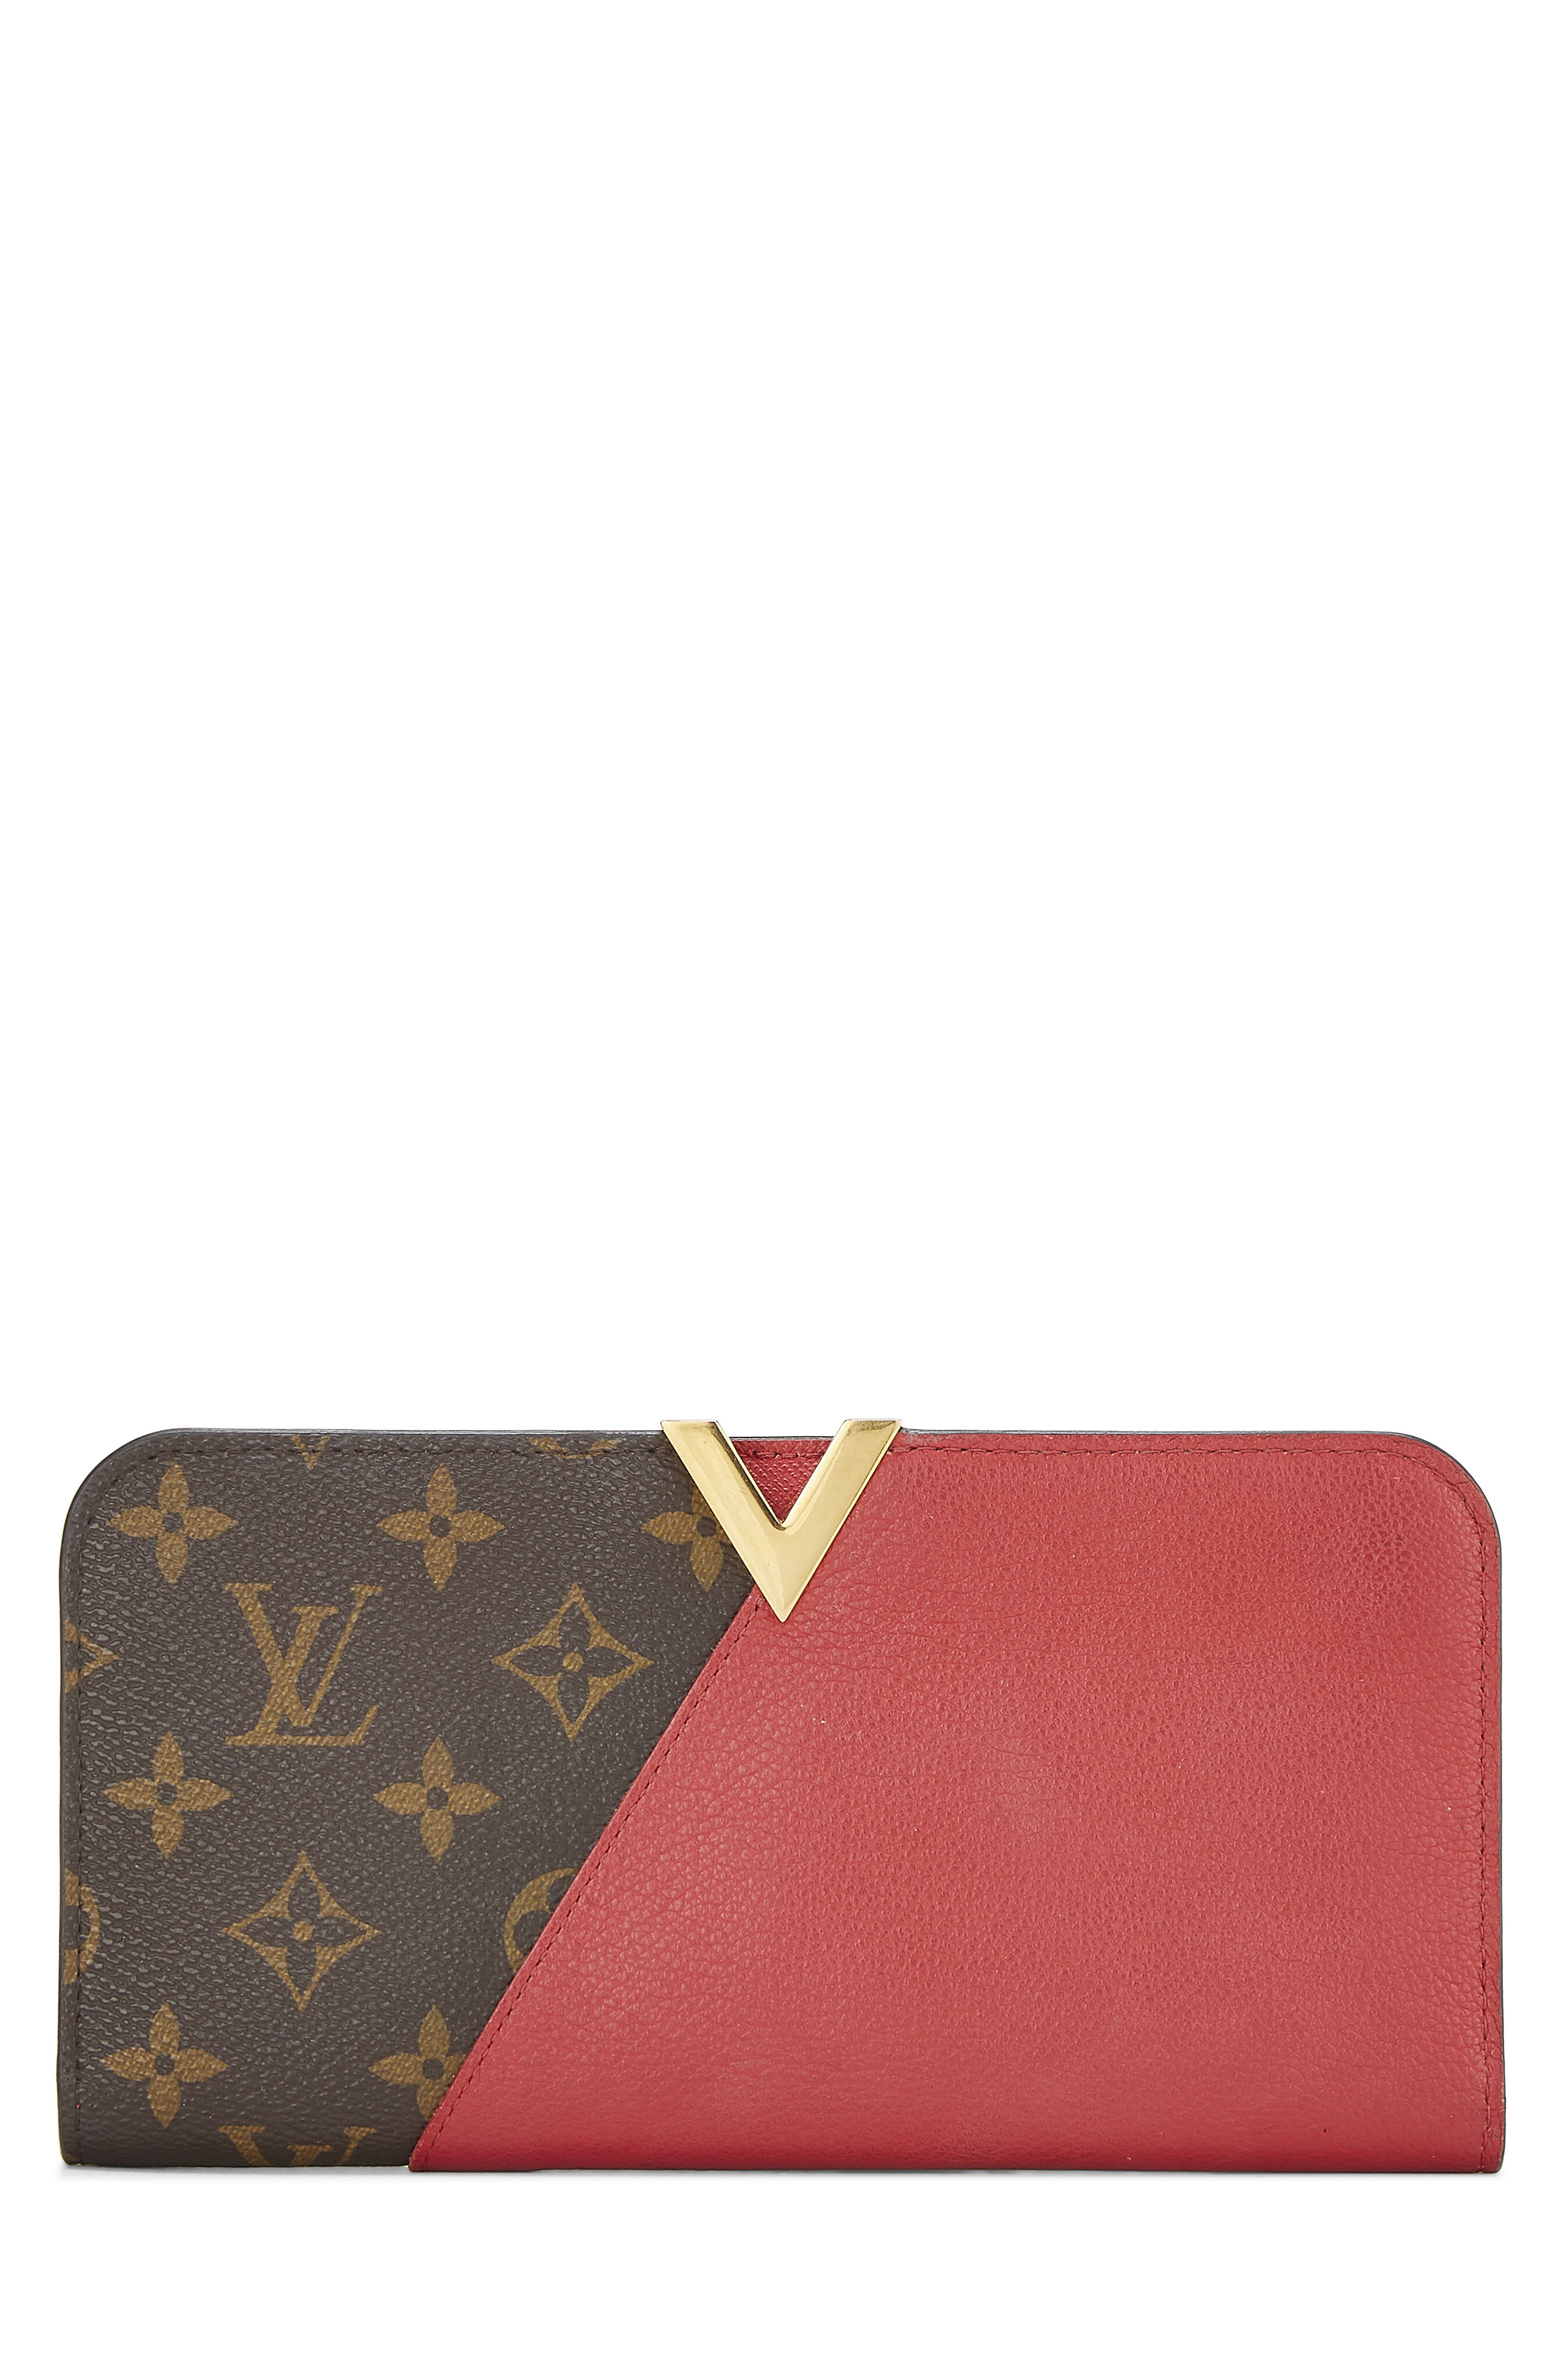 Louis Vuitton Monogram Canvas & Red Leather Kimono Wallet QJBHWC5VRB006